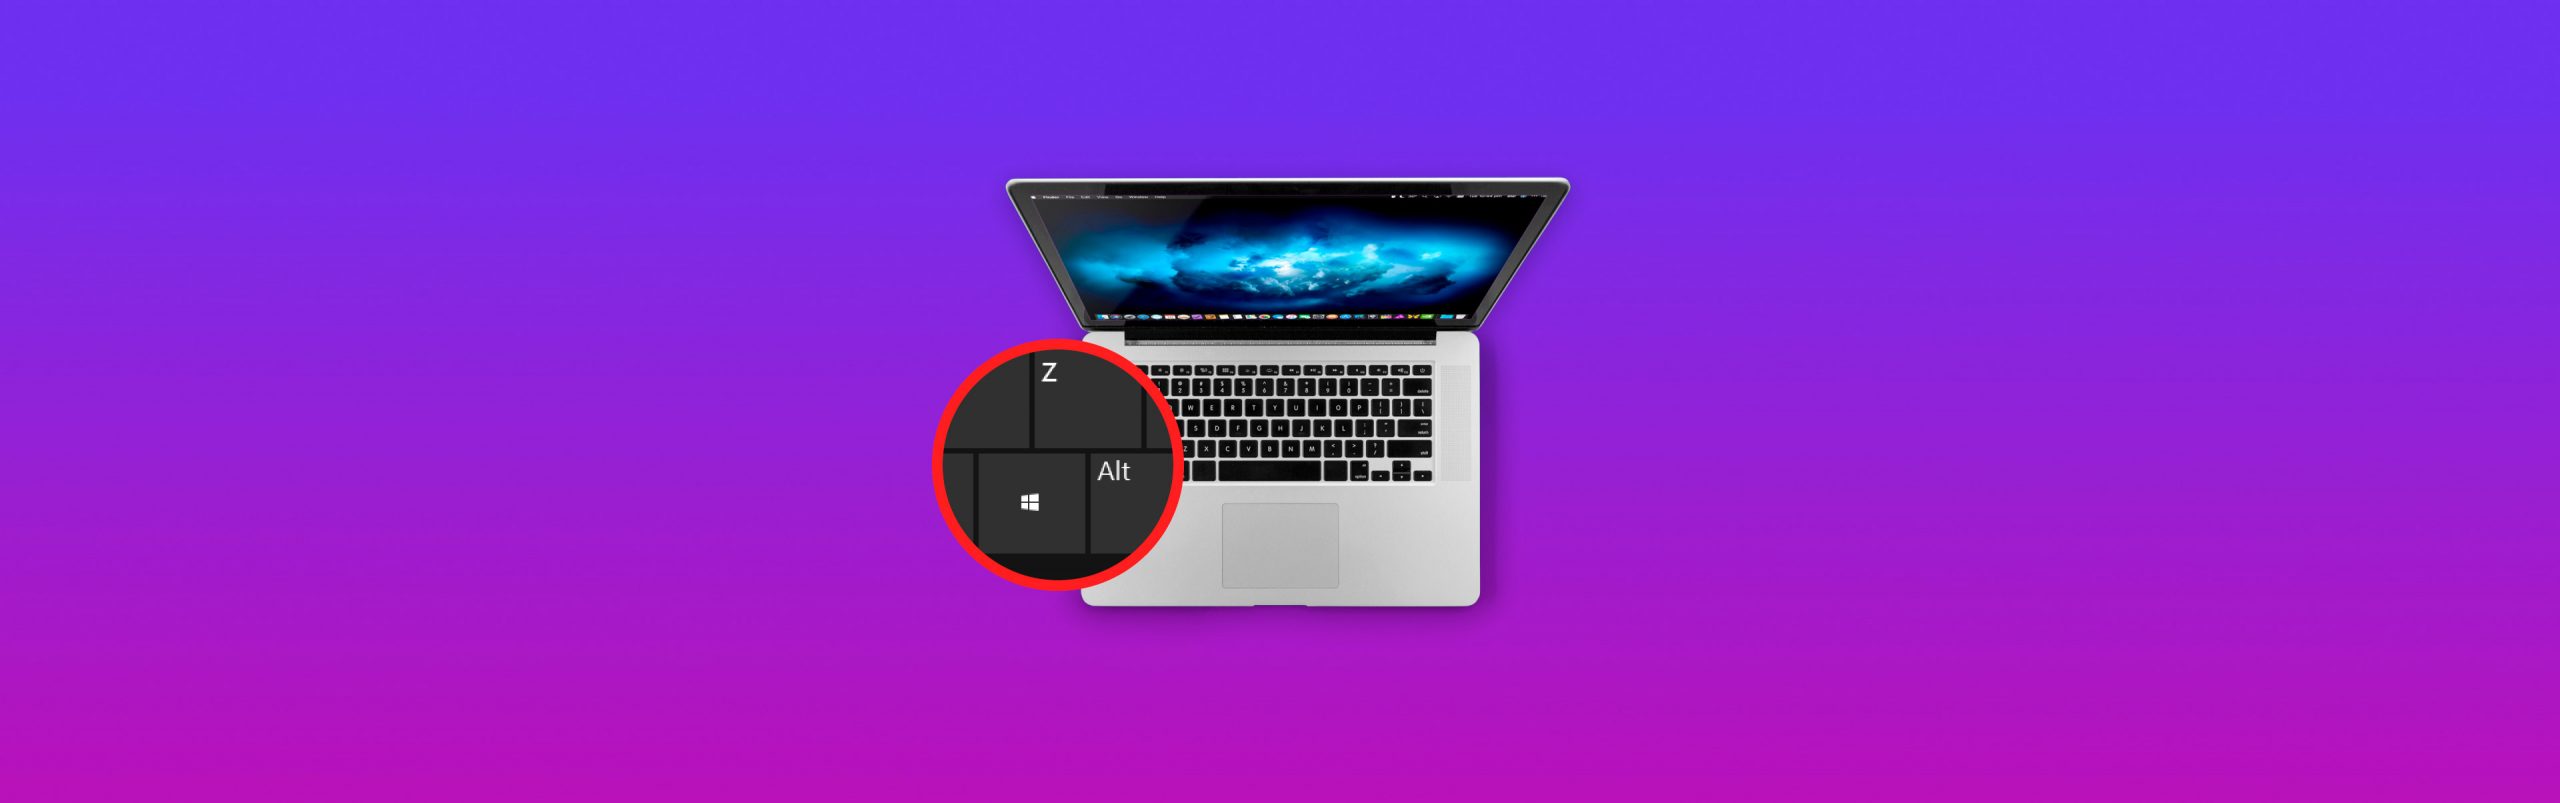 remap keyboard on mac to match pc